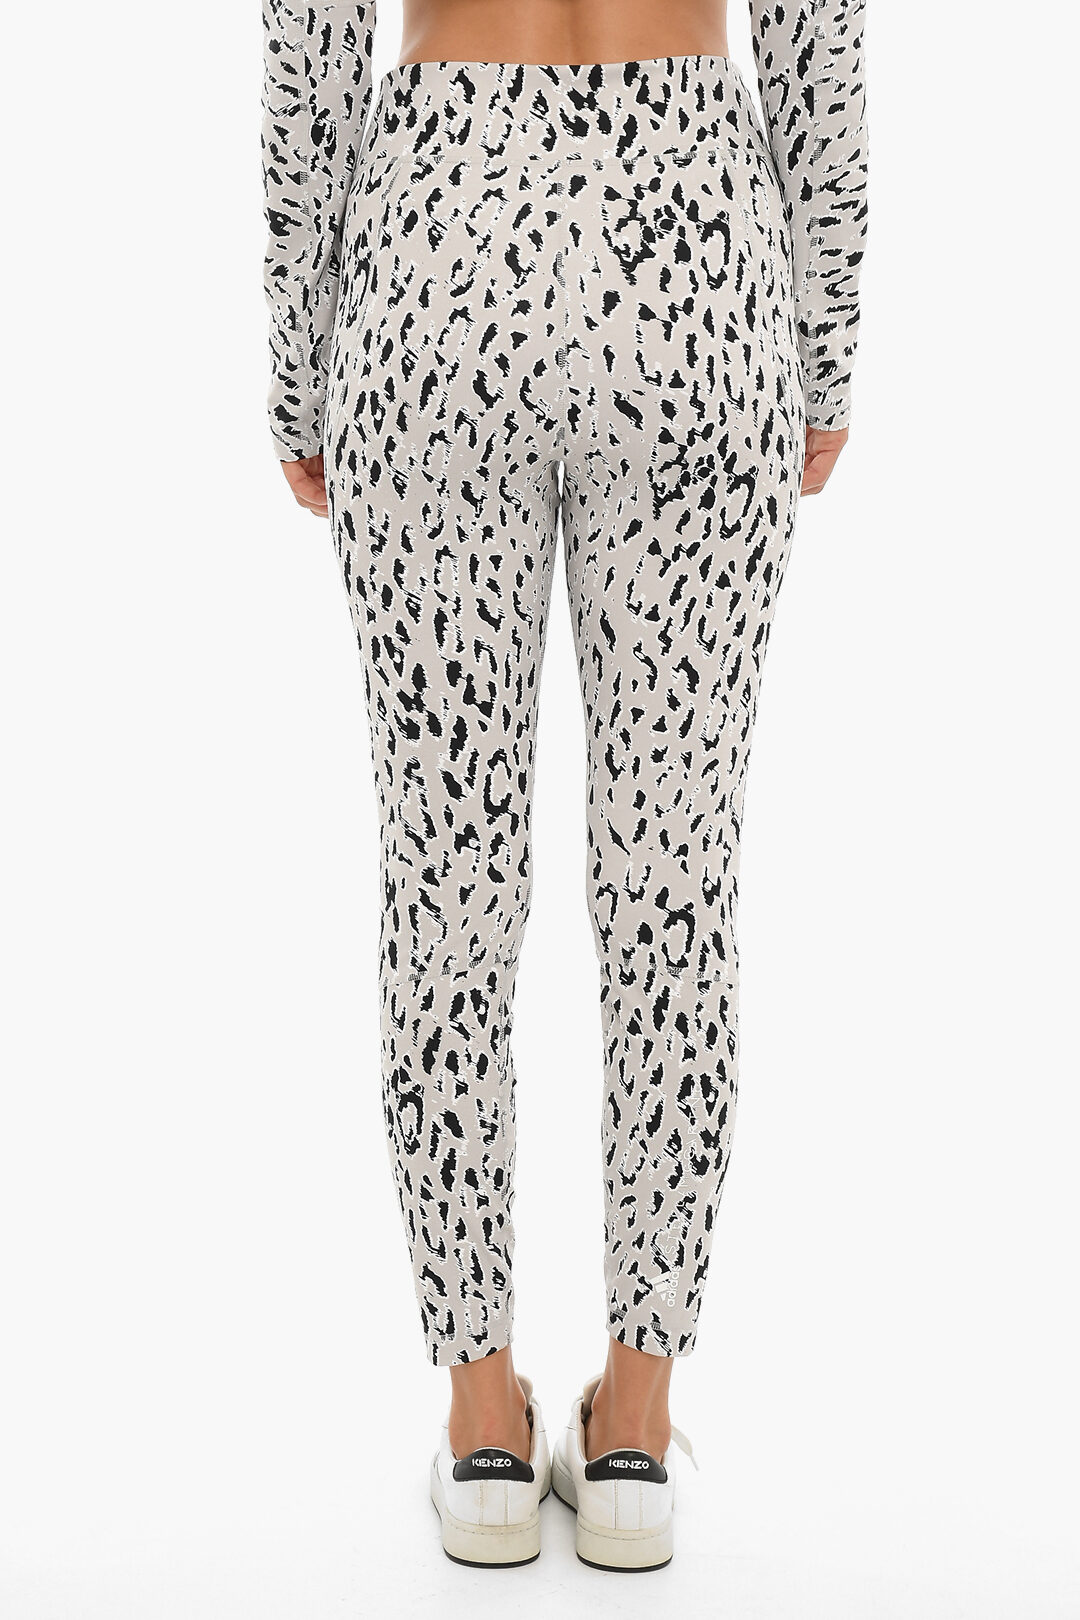  Adidas Leopard Print Leggings